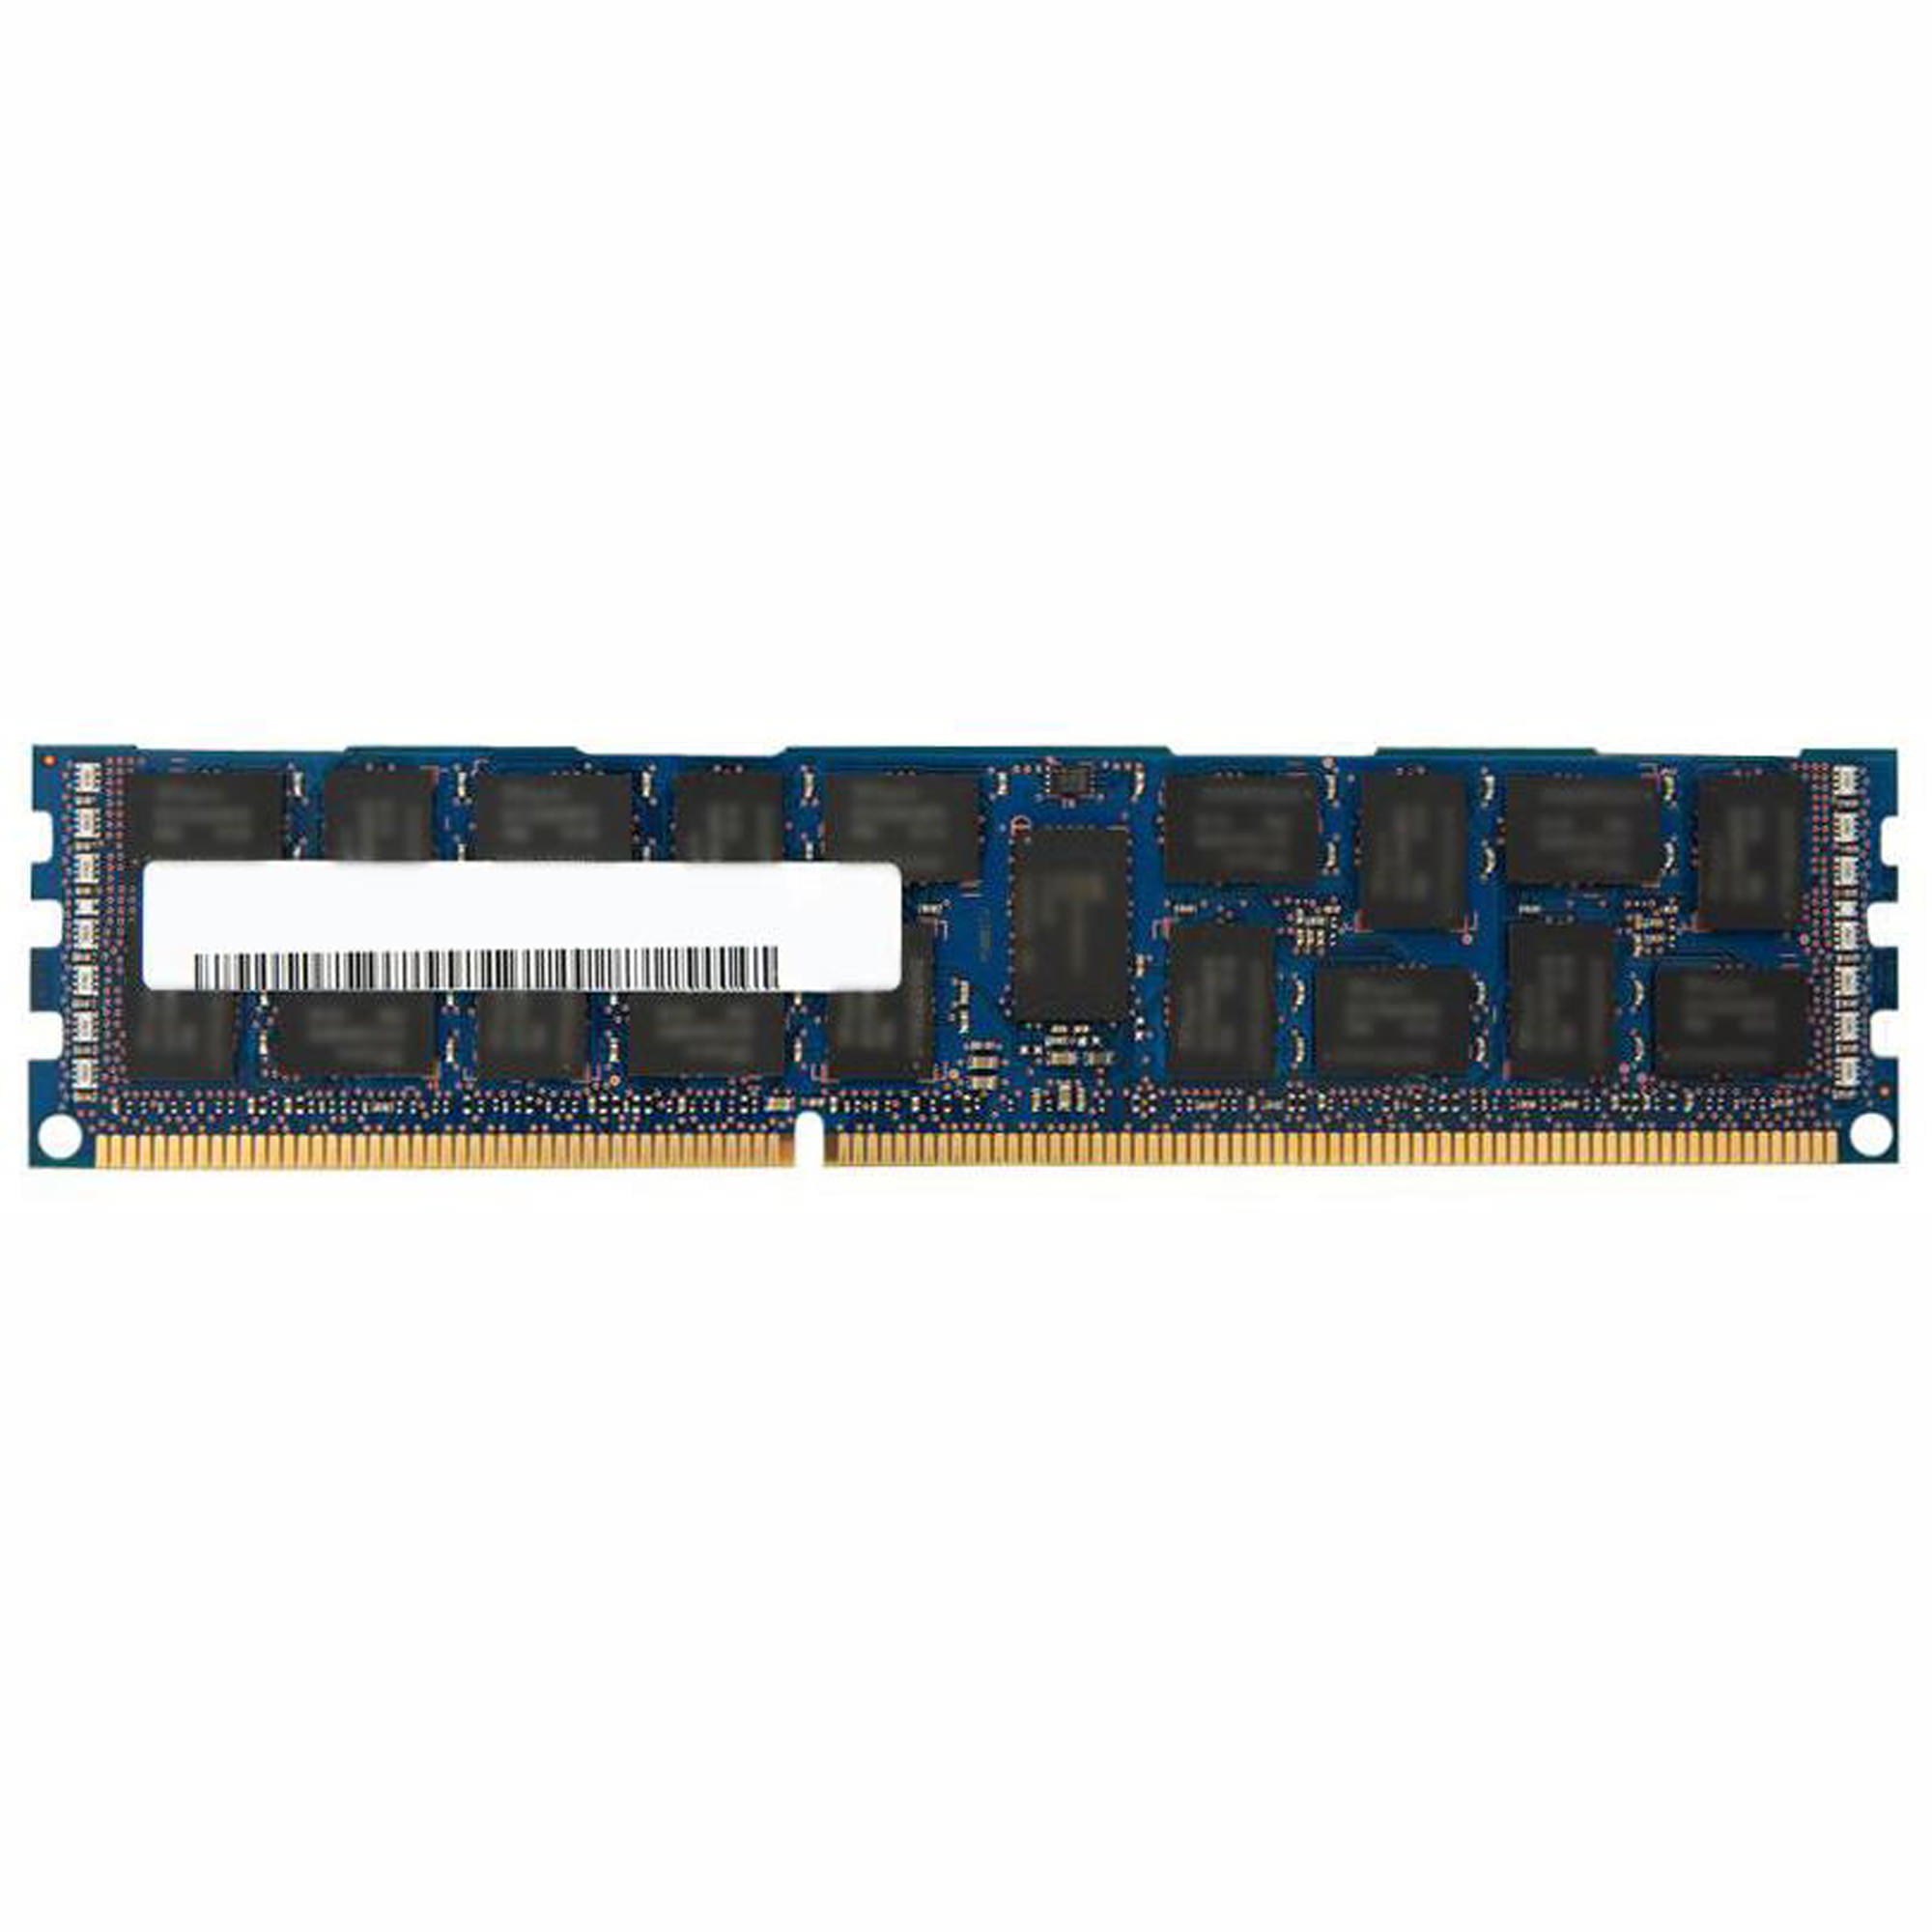 New NOT for PC/MAC 8GB Memory Module ECC REG PC3-12800 for Dell PowerEdge R720xd